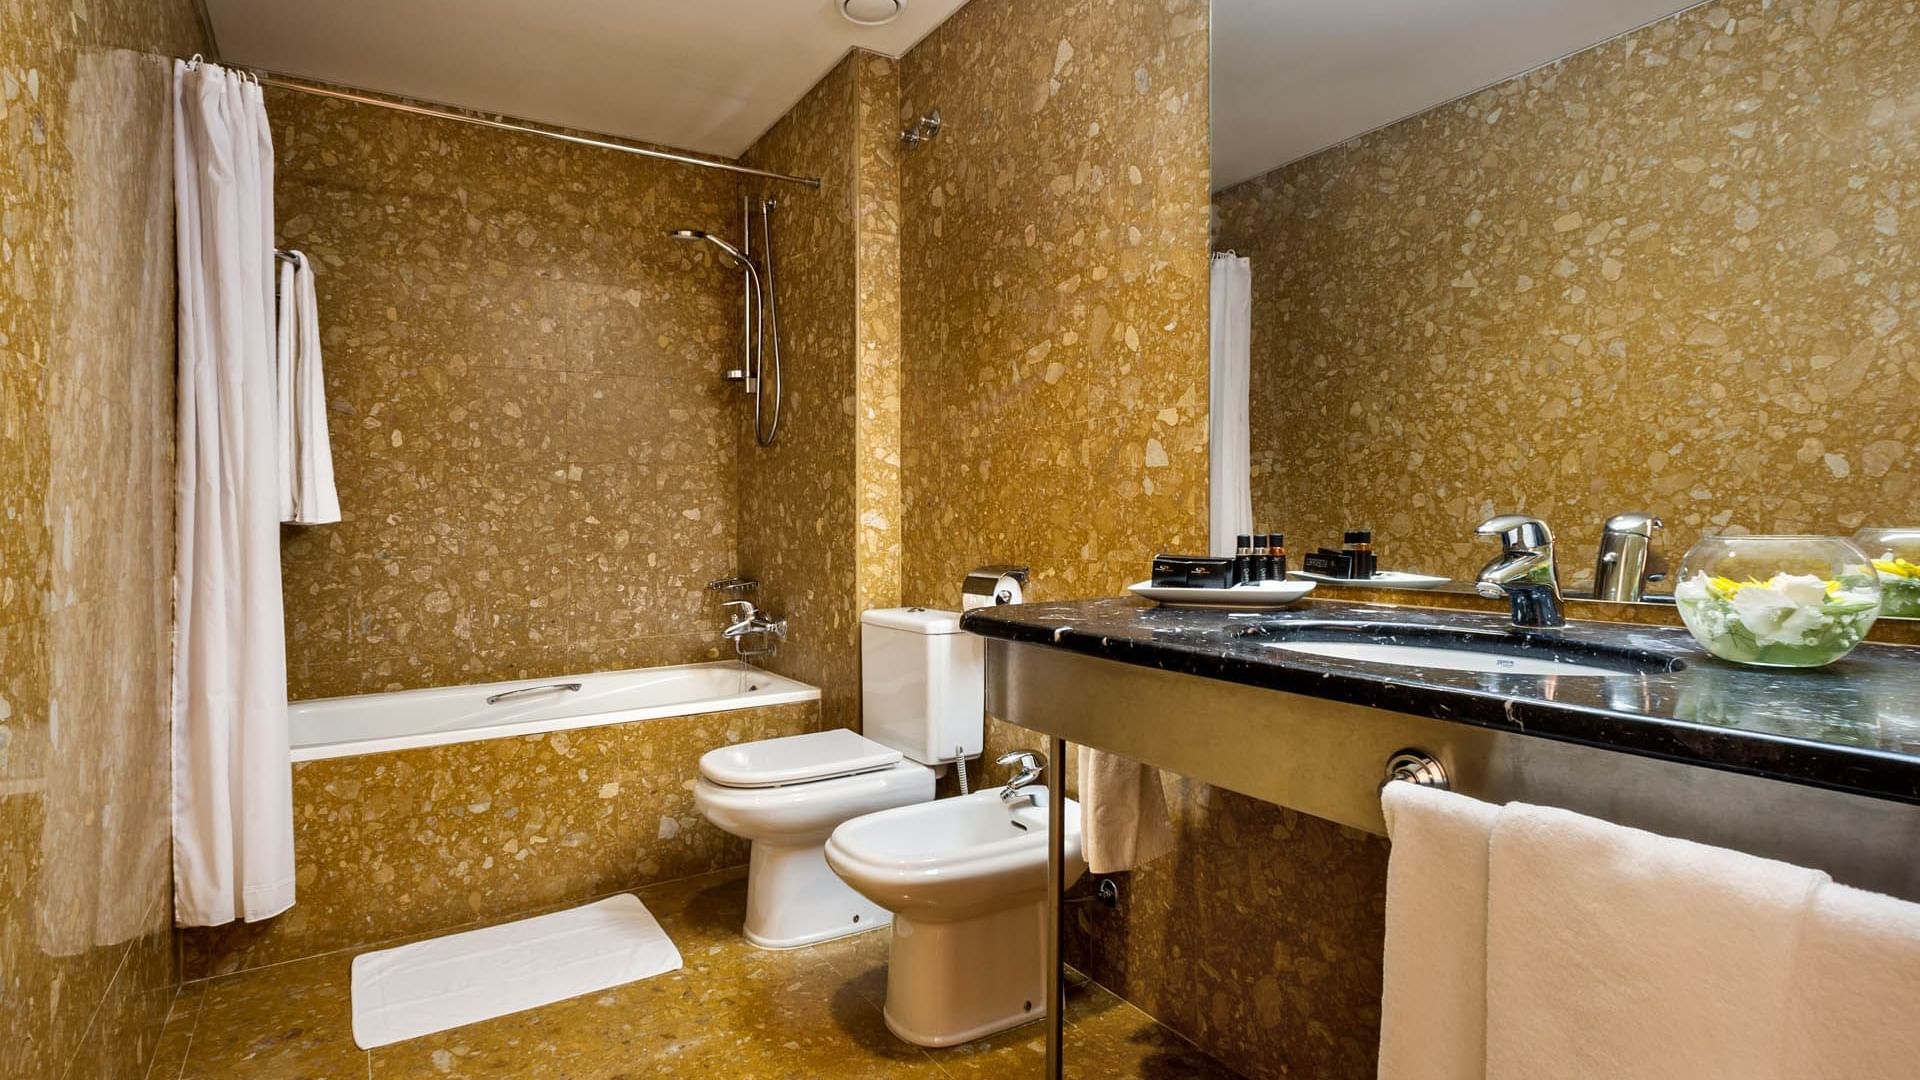 Bathroom of standard suites at Bensaude Hotels Collection